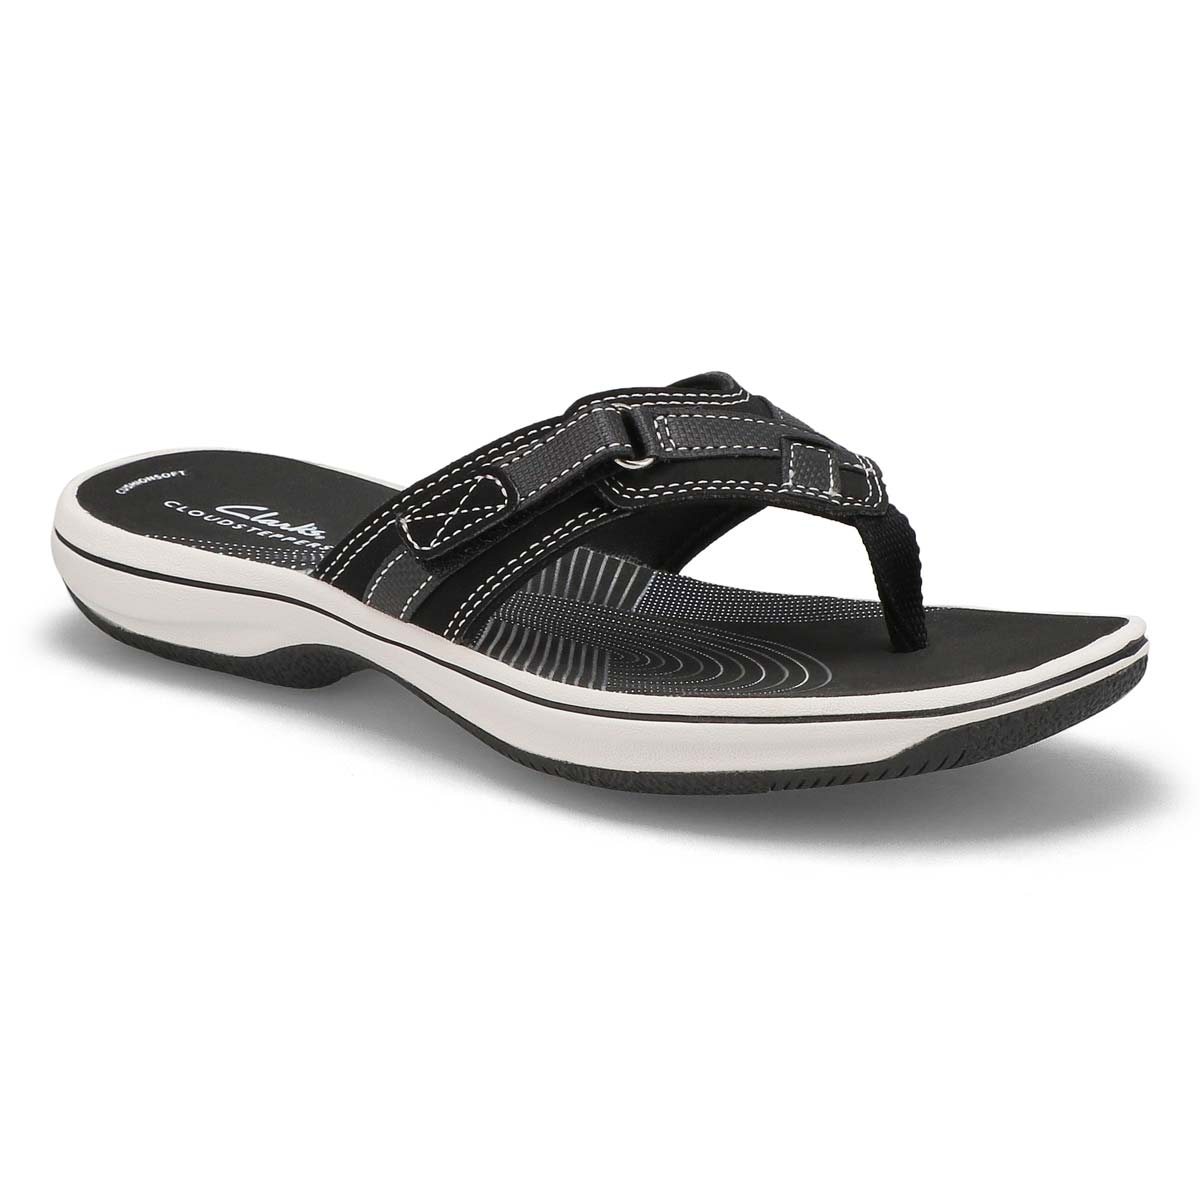 clarks gray sandals